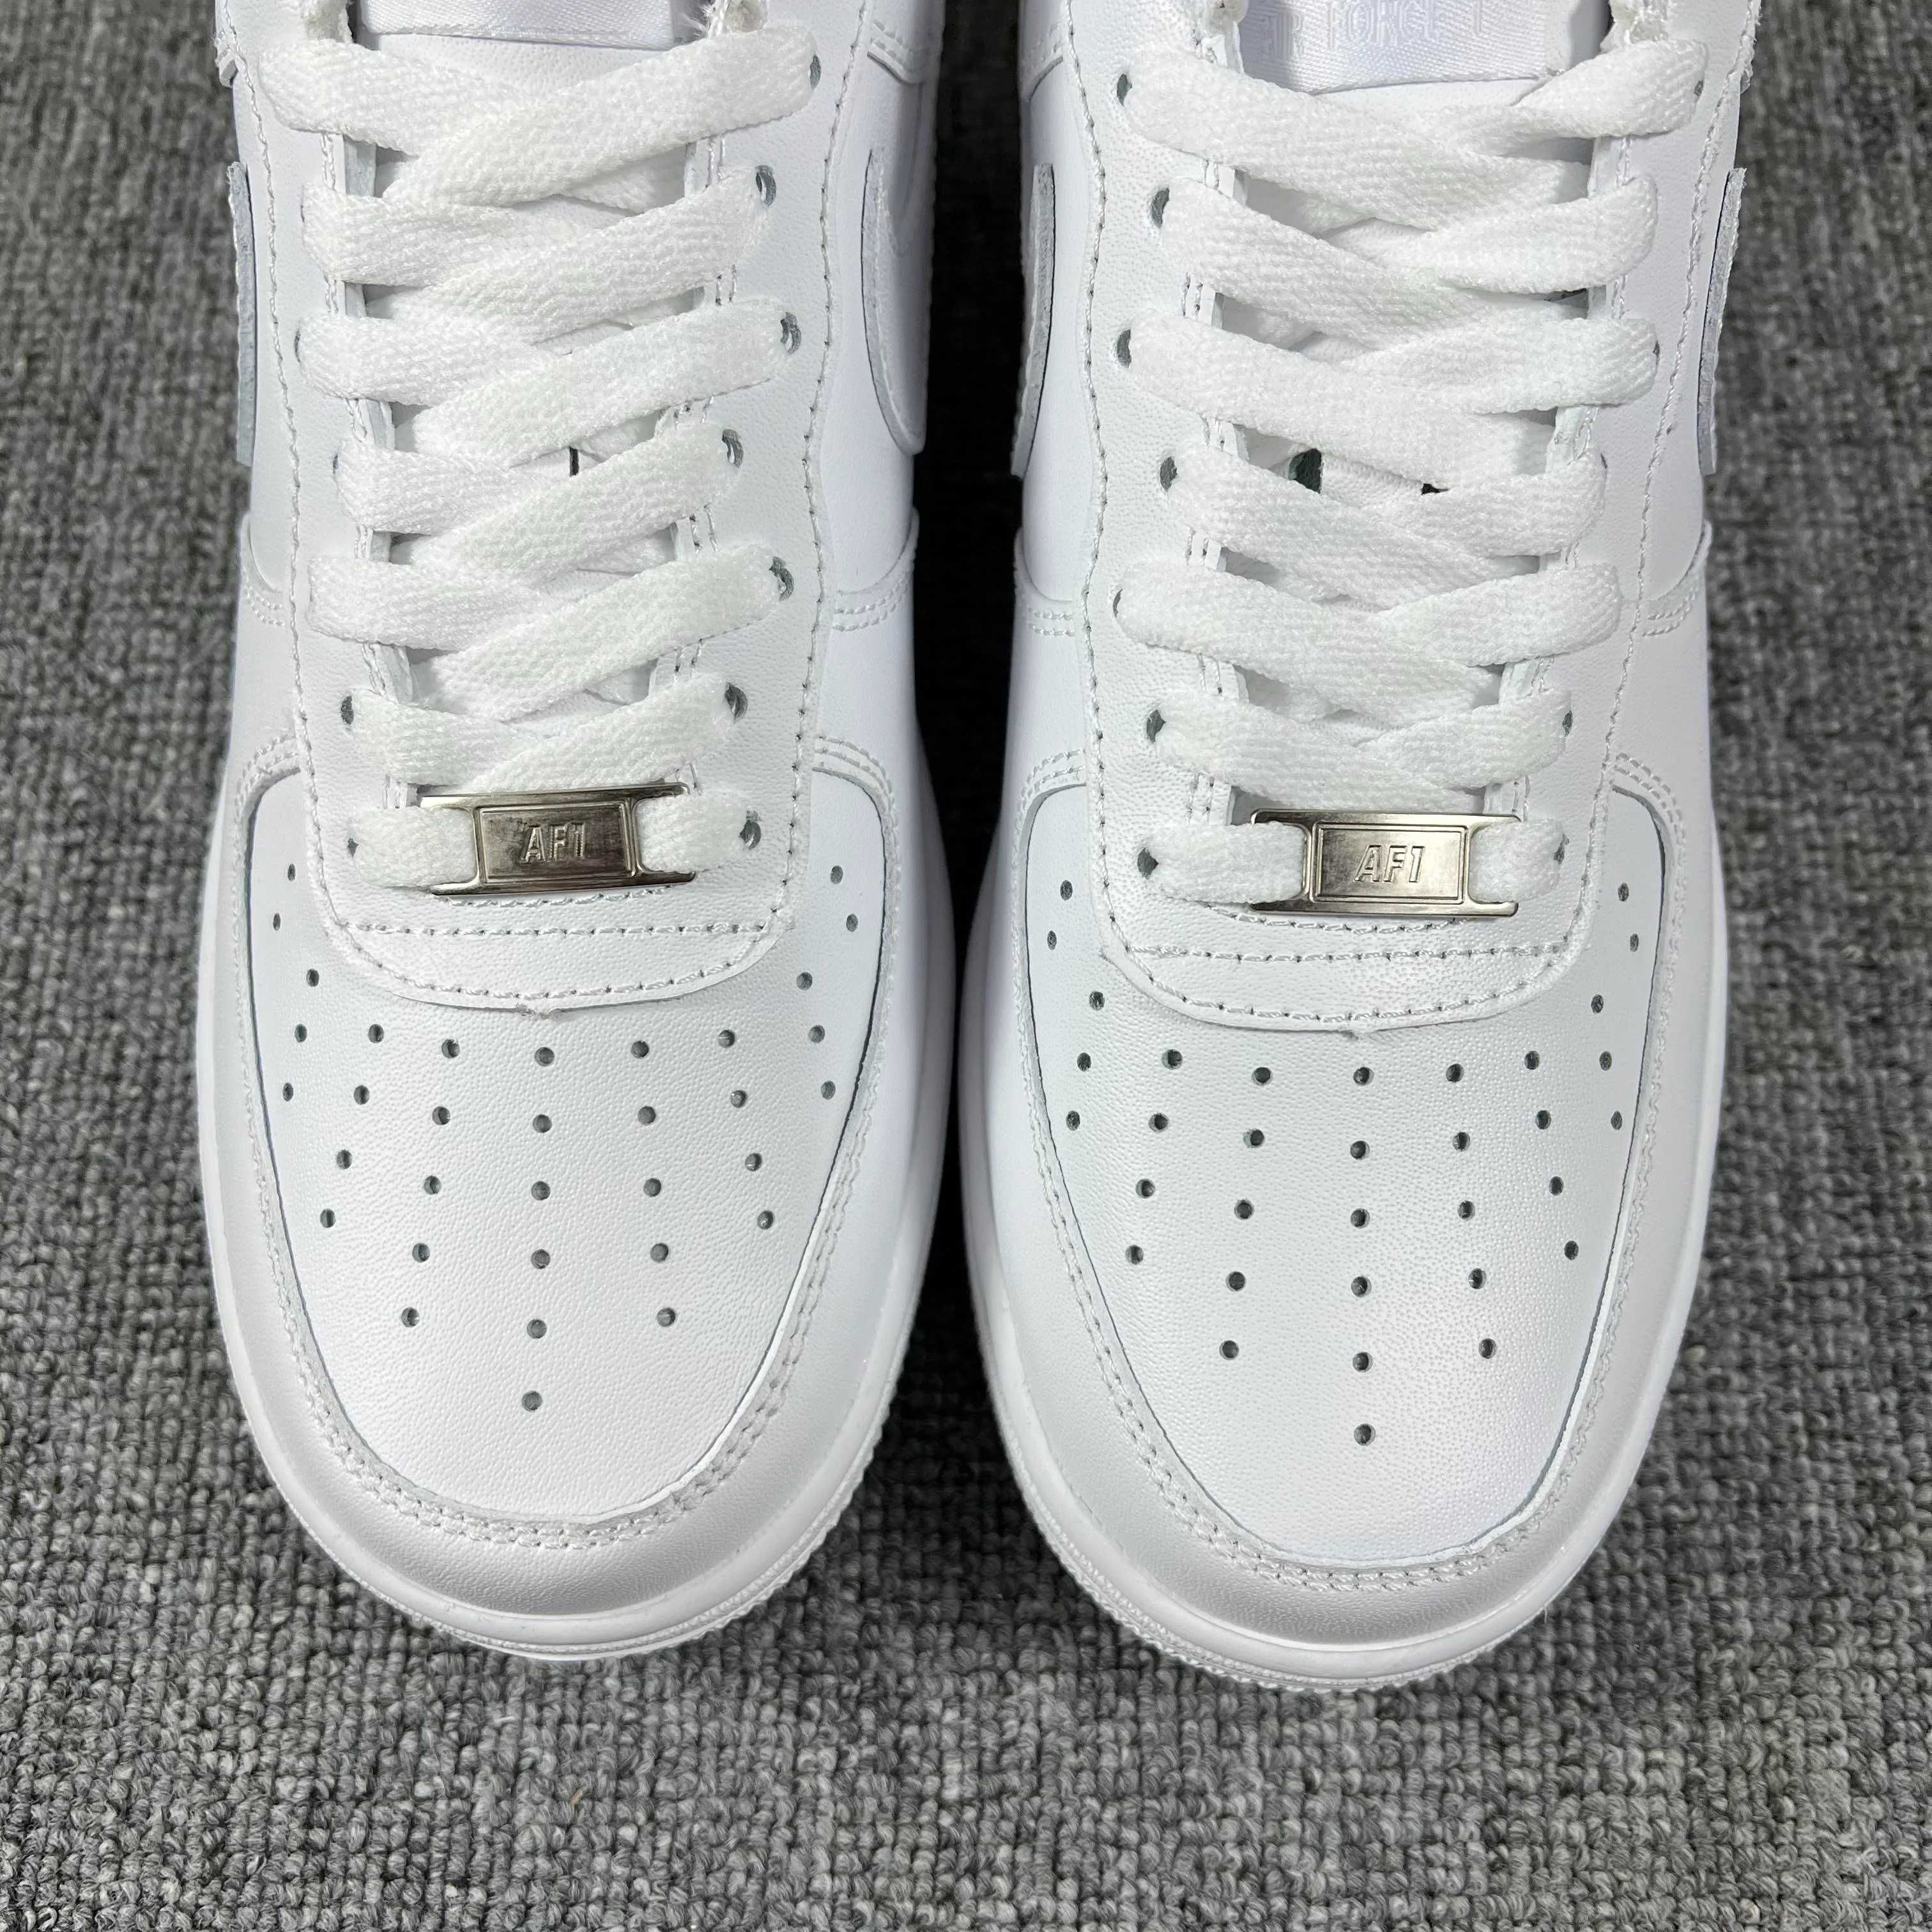 Nike Air Force 1 Triple White / No Box